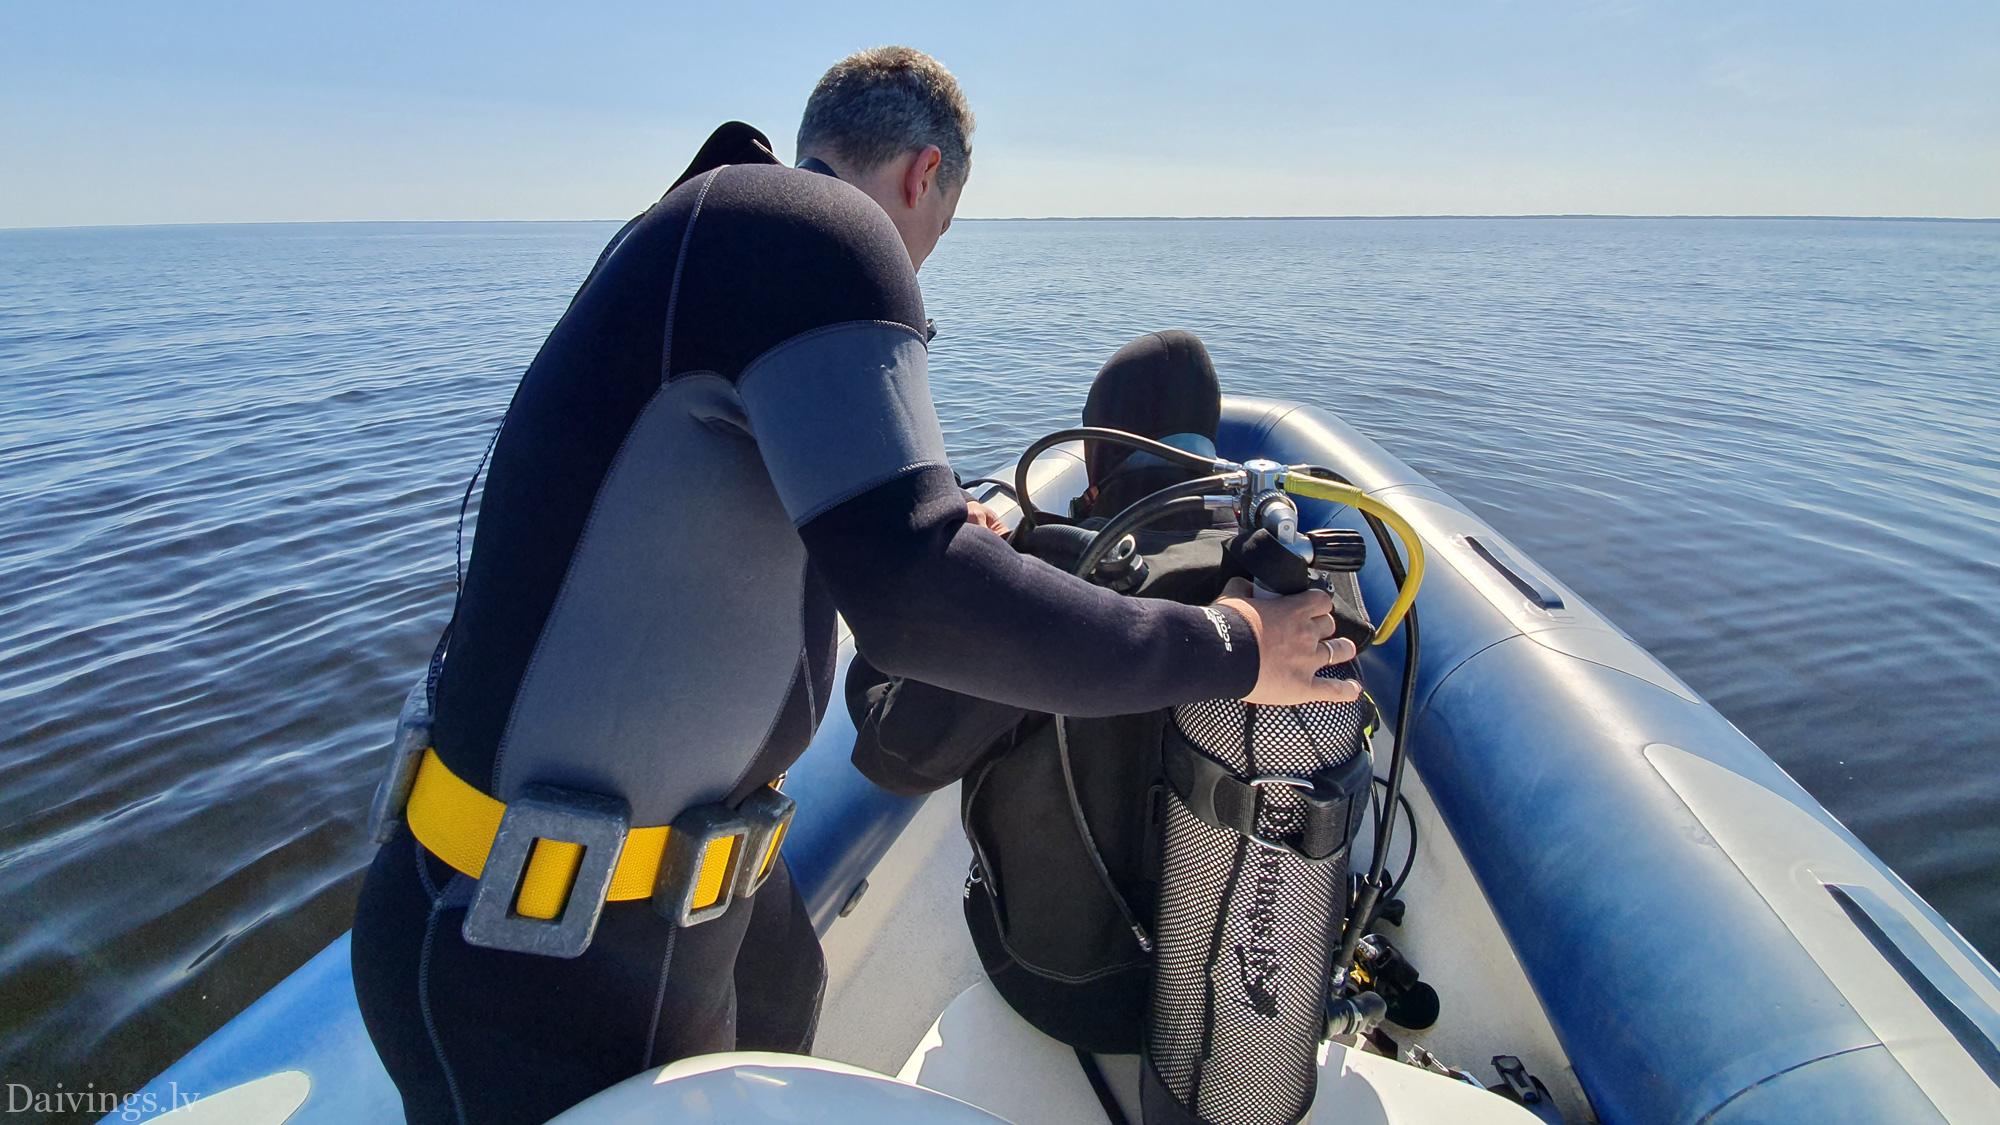 Taucher des RIB Motorboat Diving Club Daivings untersuchen das Wrack